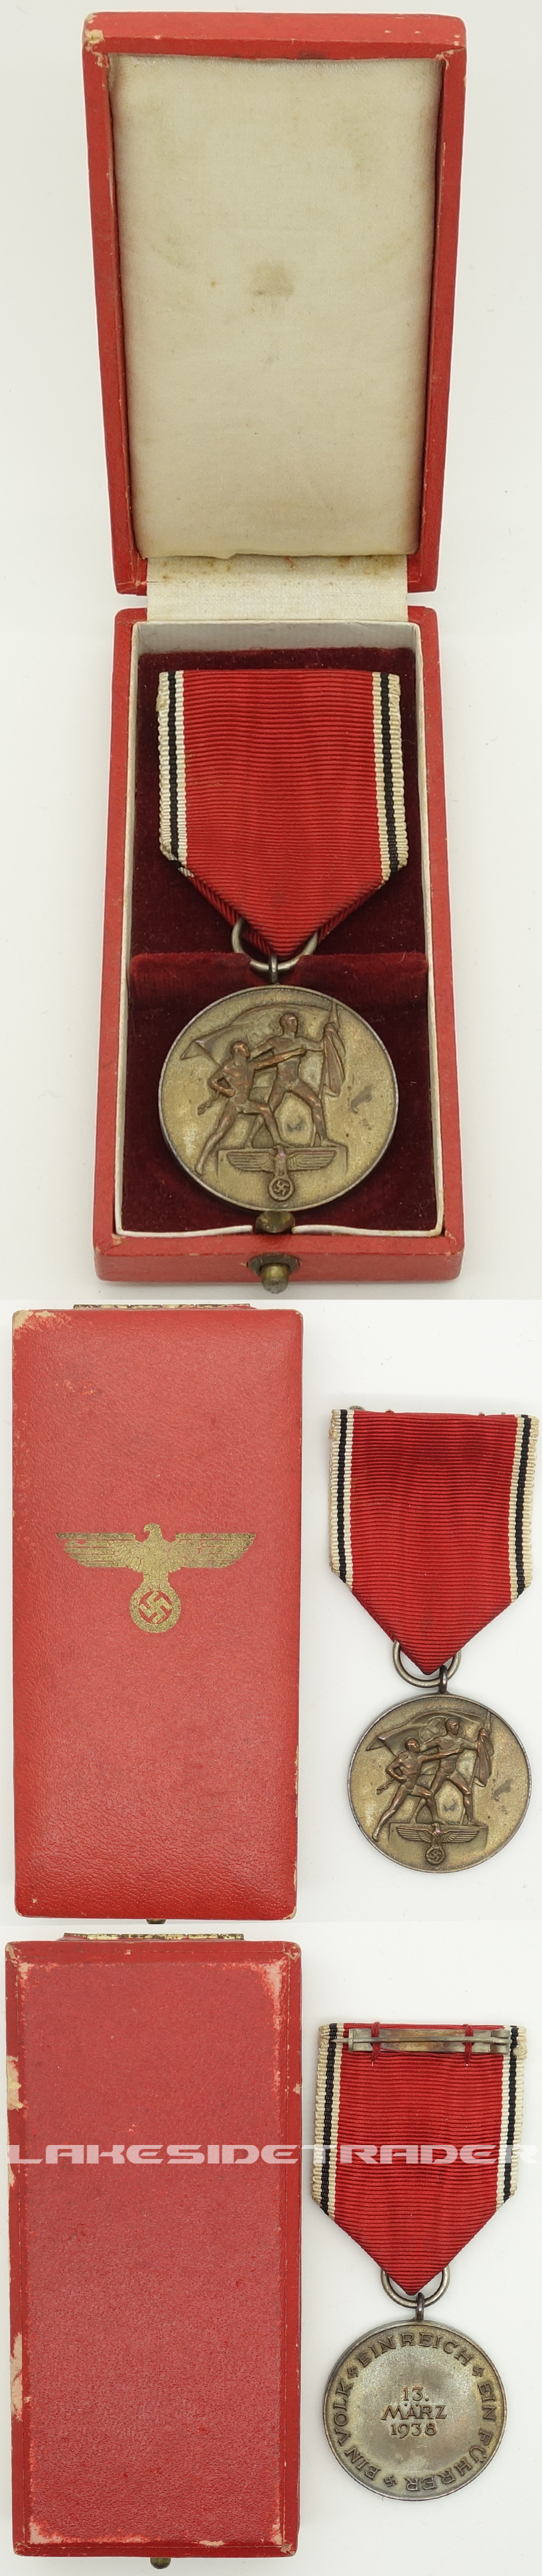 Cased 13 March 1938 Commemorative Medal (Austria)